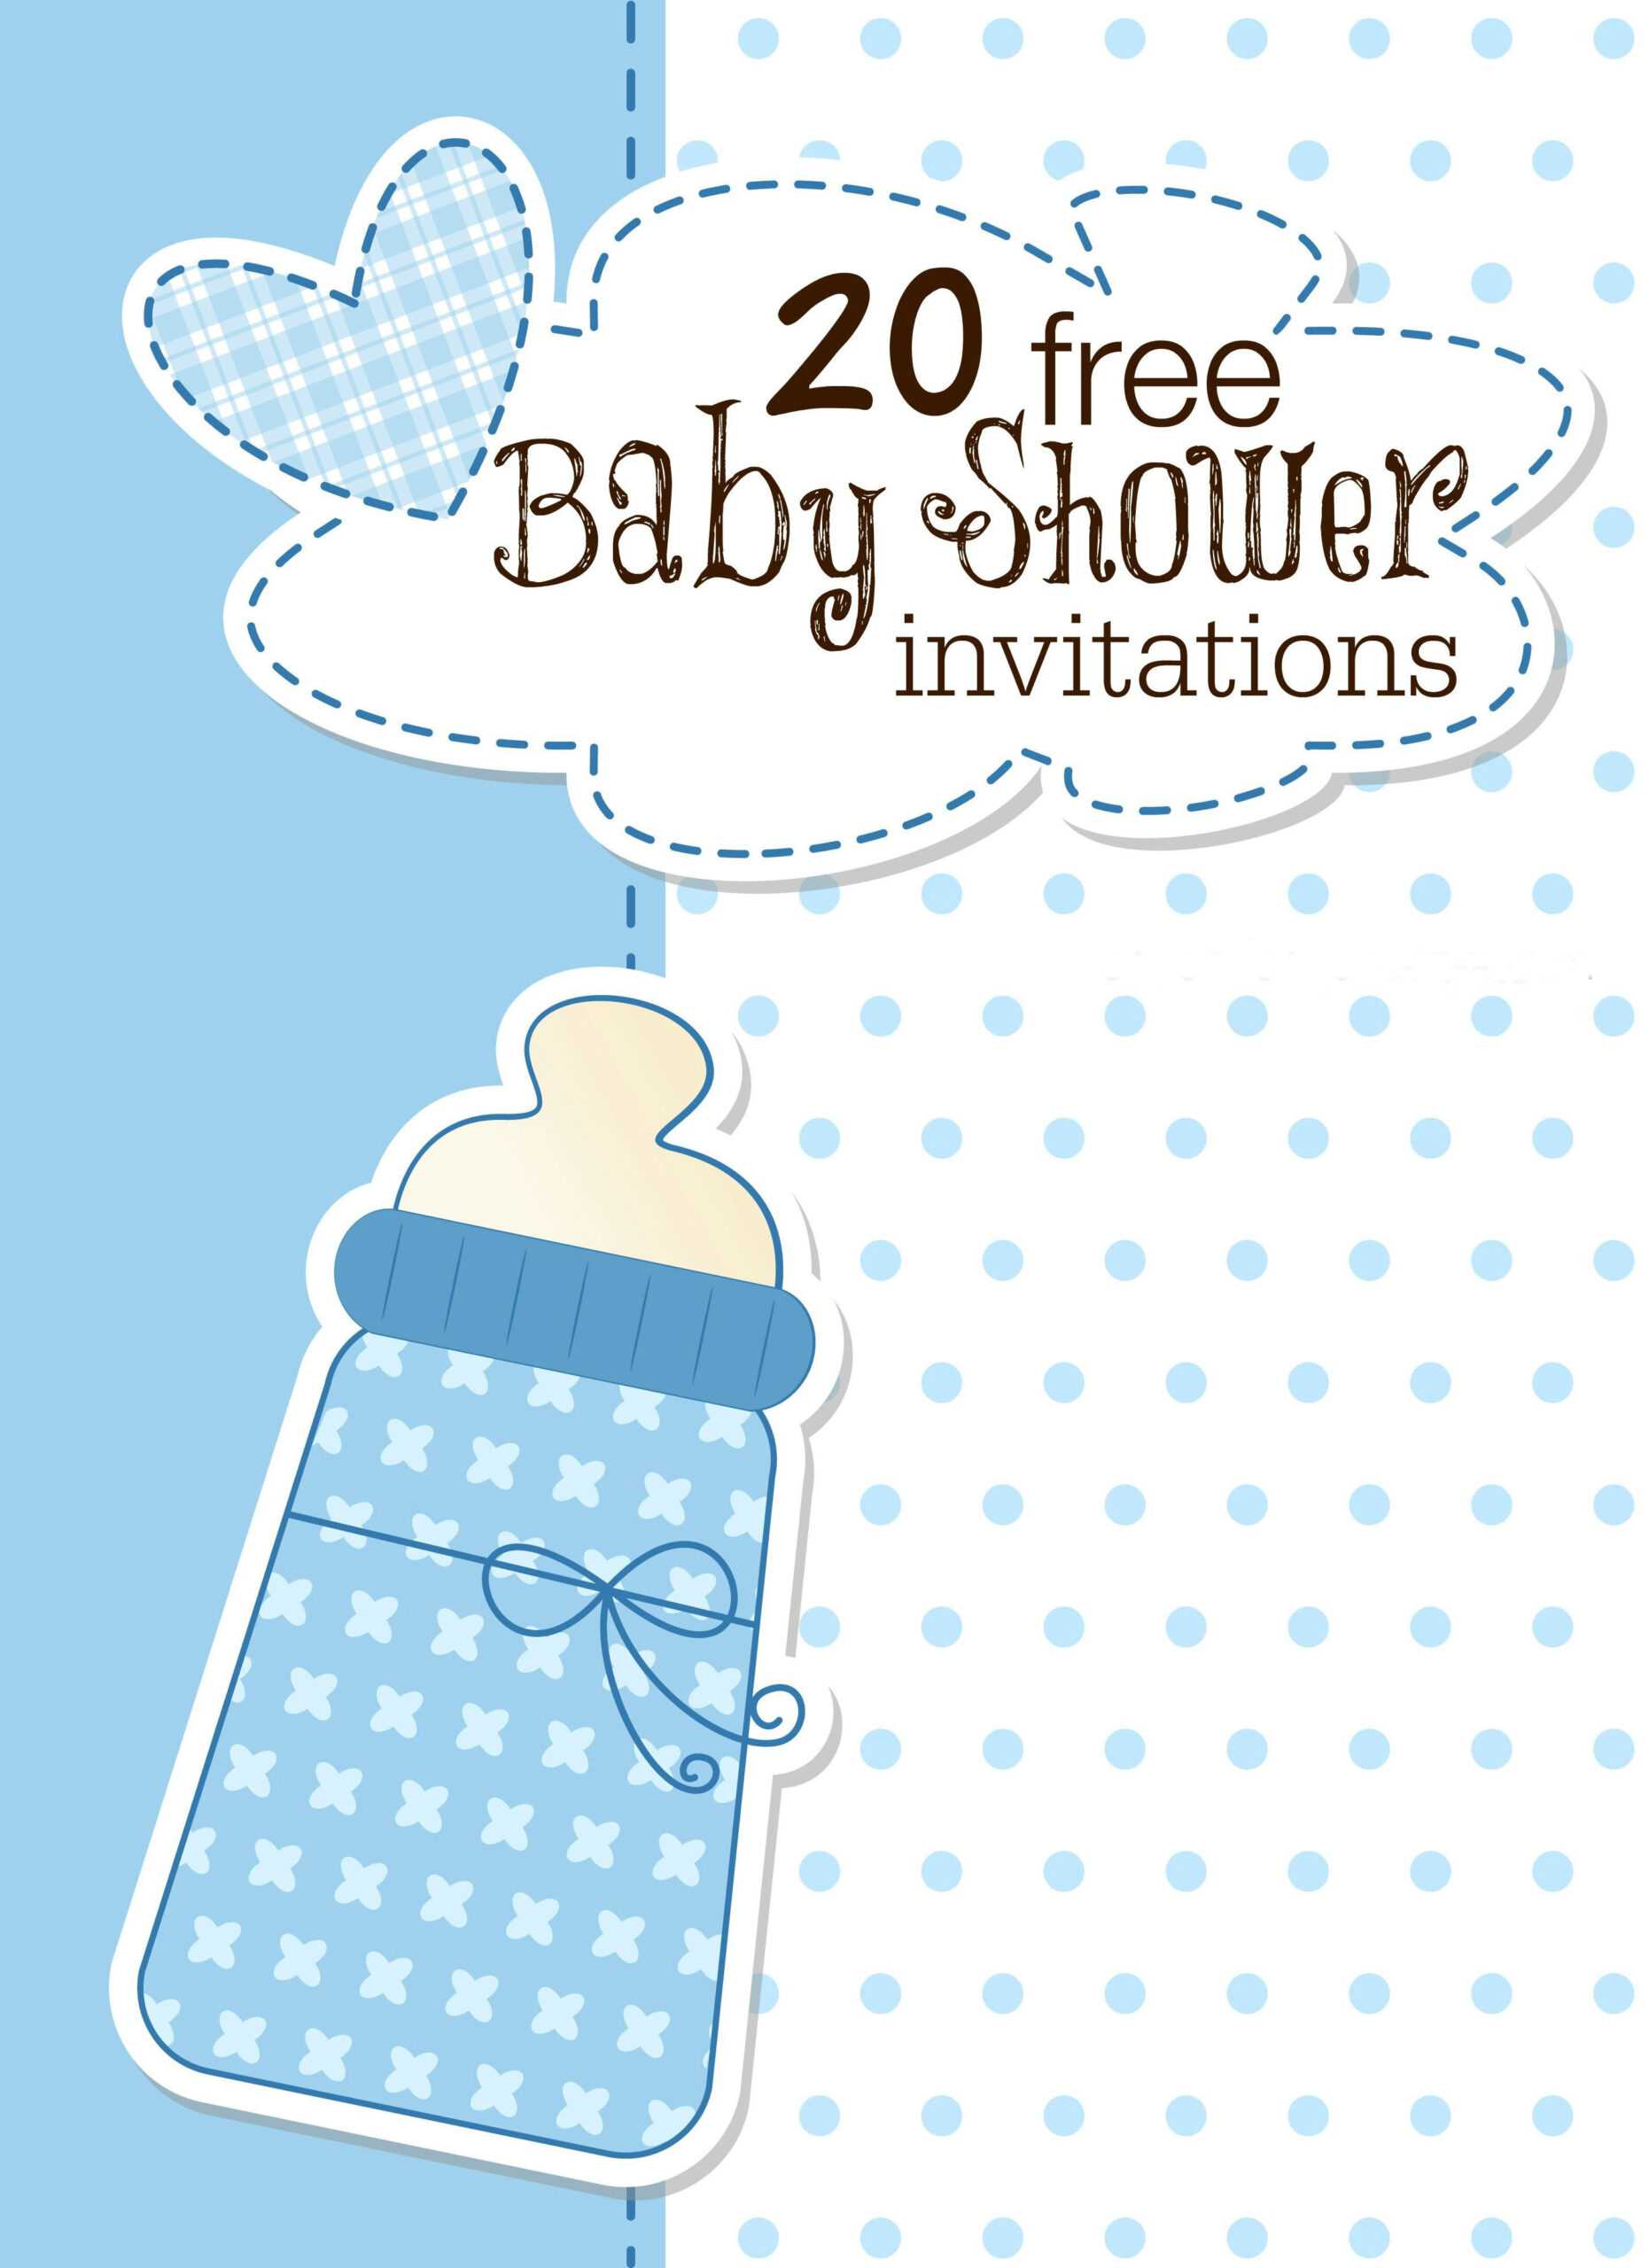 Free Shower Invitation Template Luxury Free Baby Invitation With Free Baby Shower Invitation Templates Microsoft Word